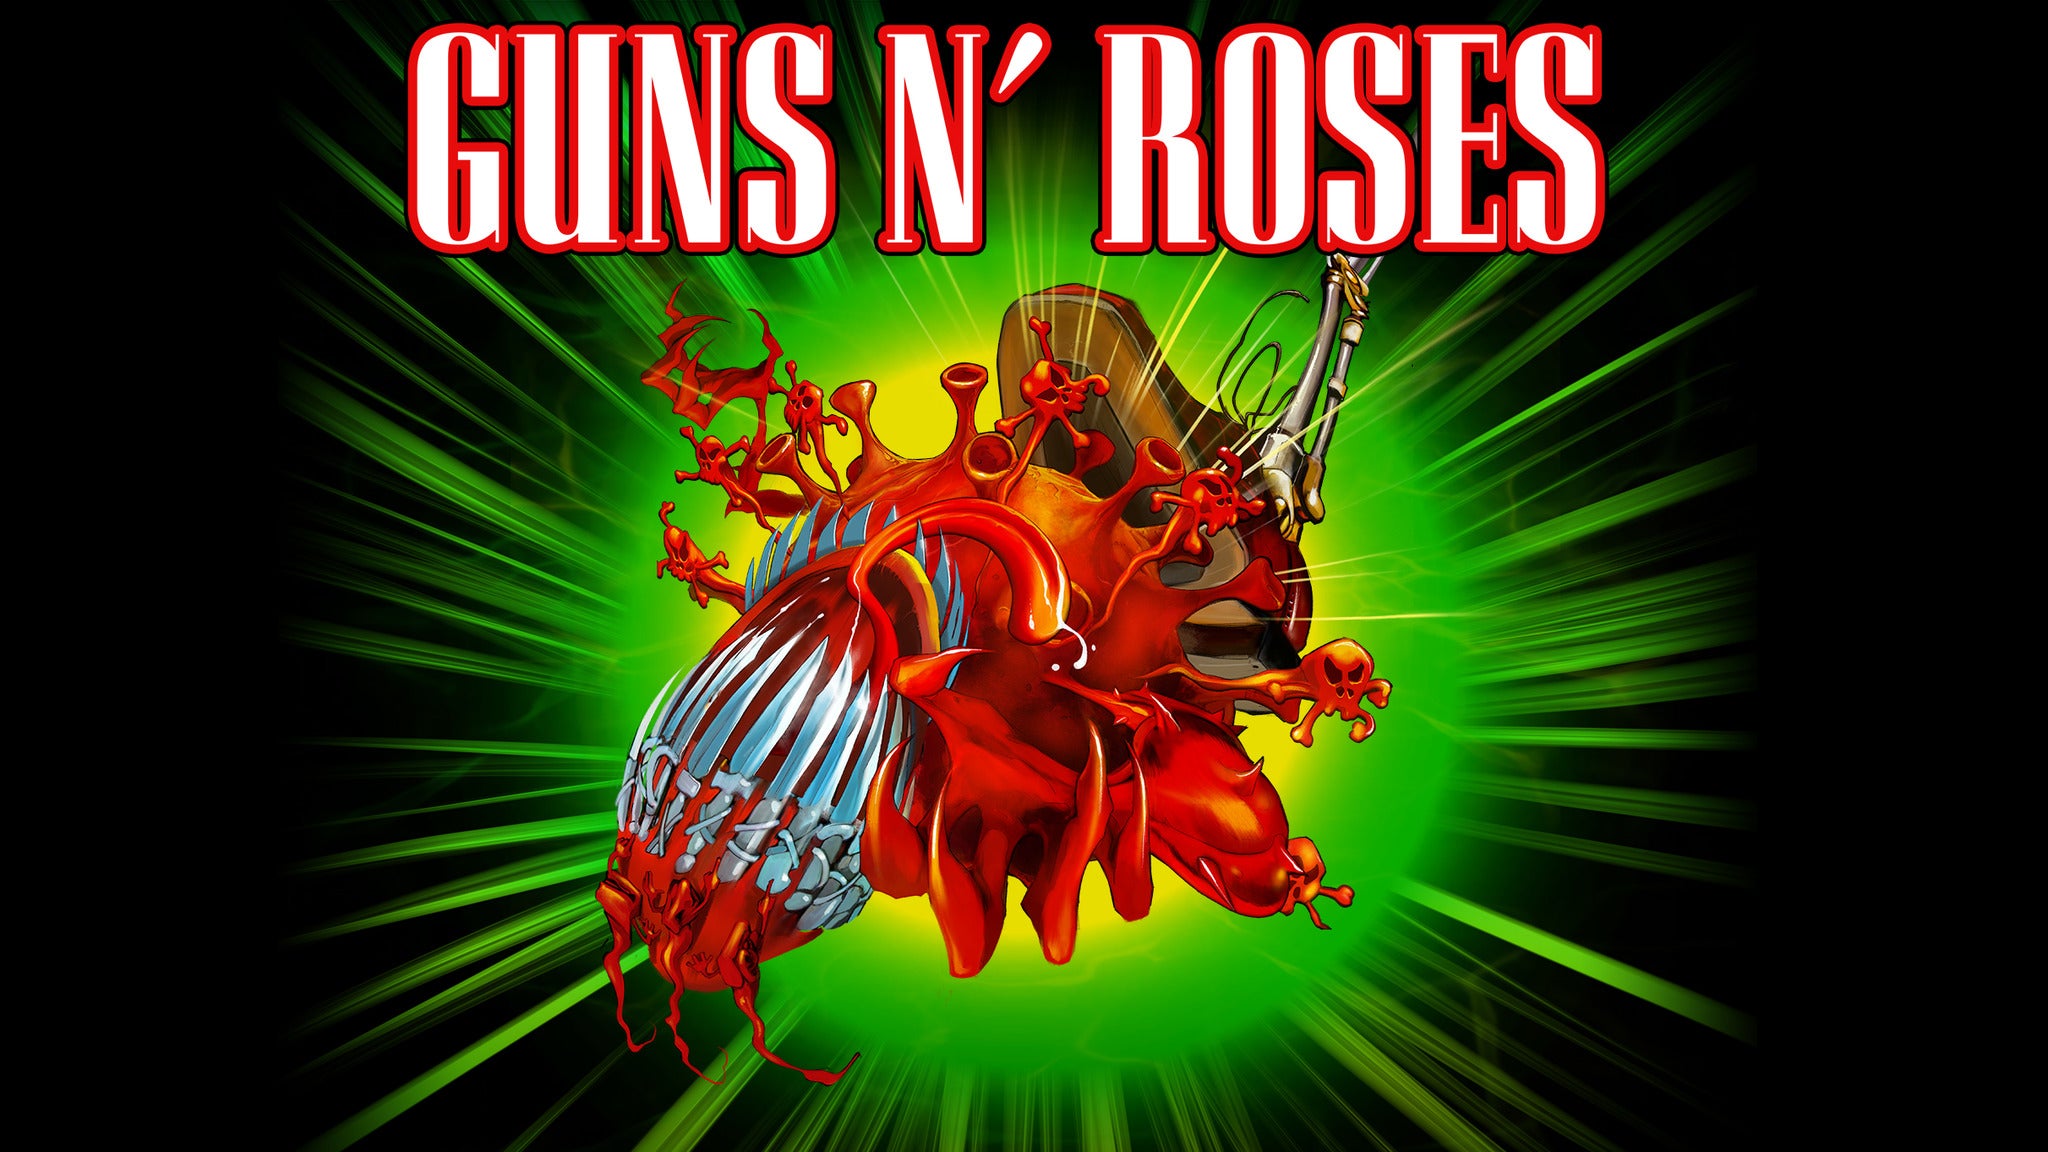 Guns N' Roses 2021 Tour in Saint Paul event information